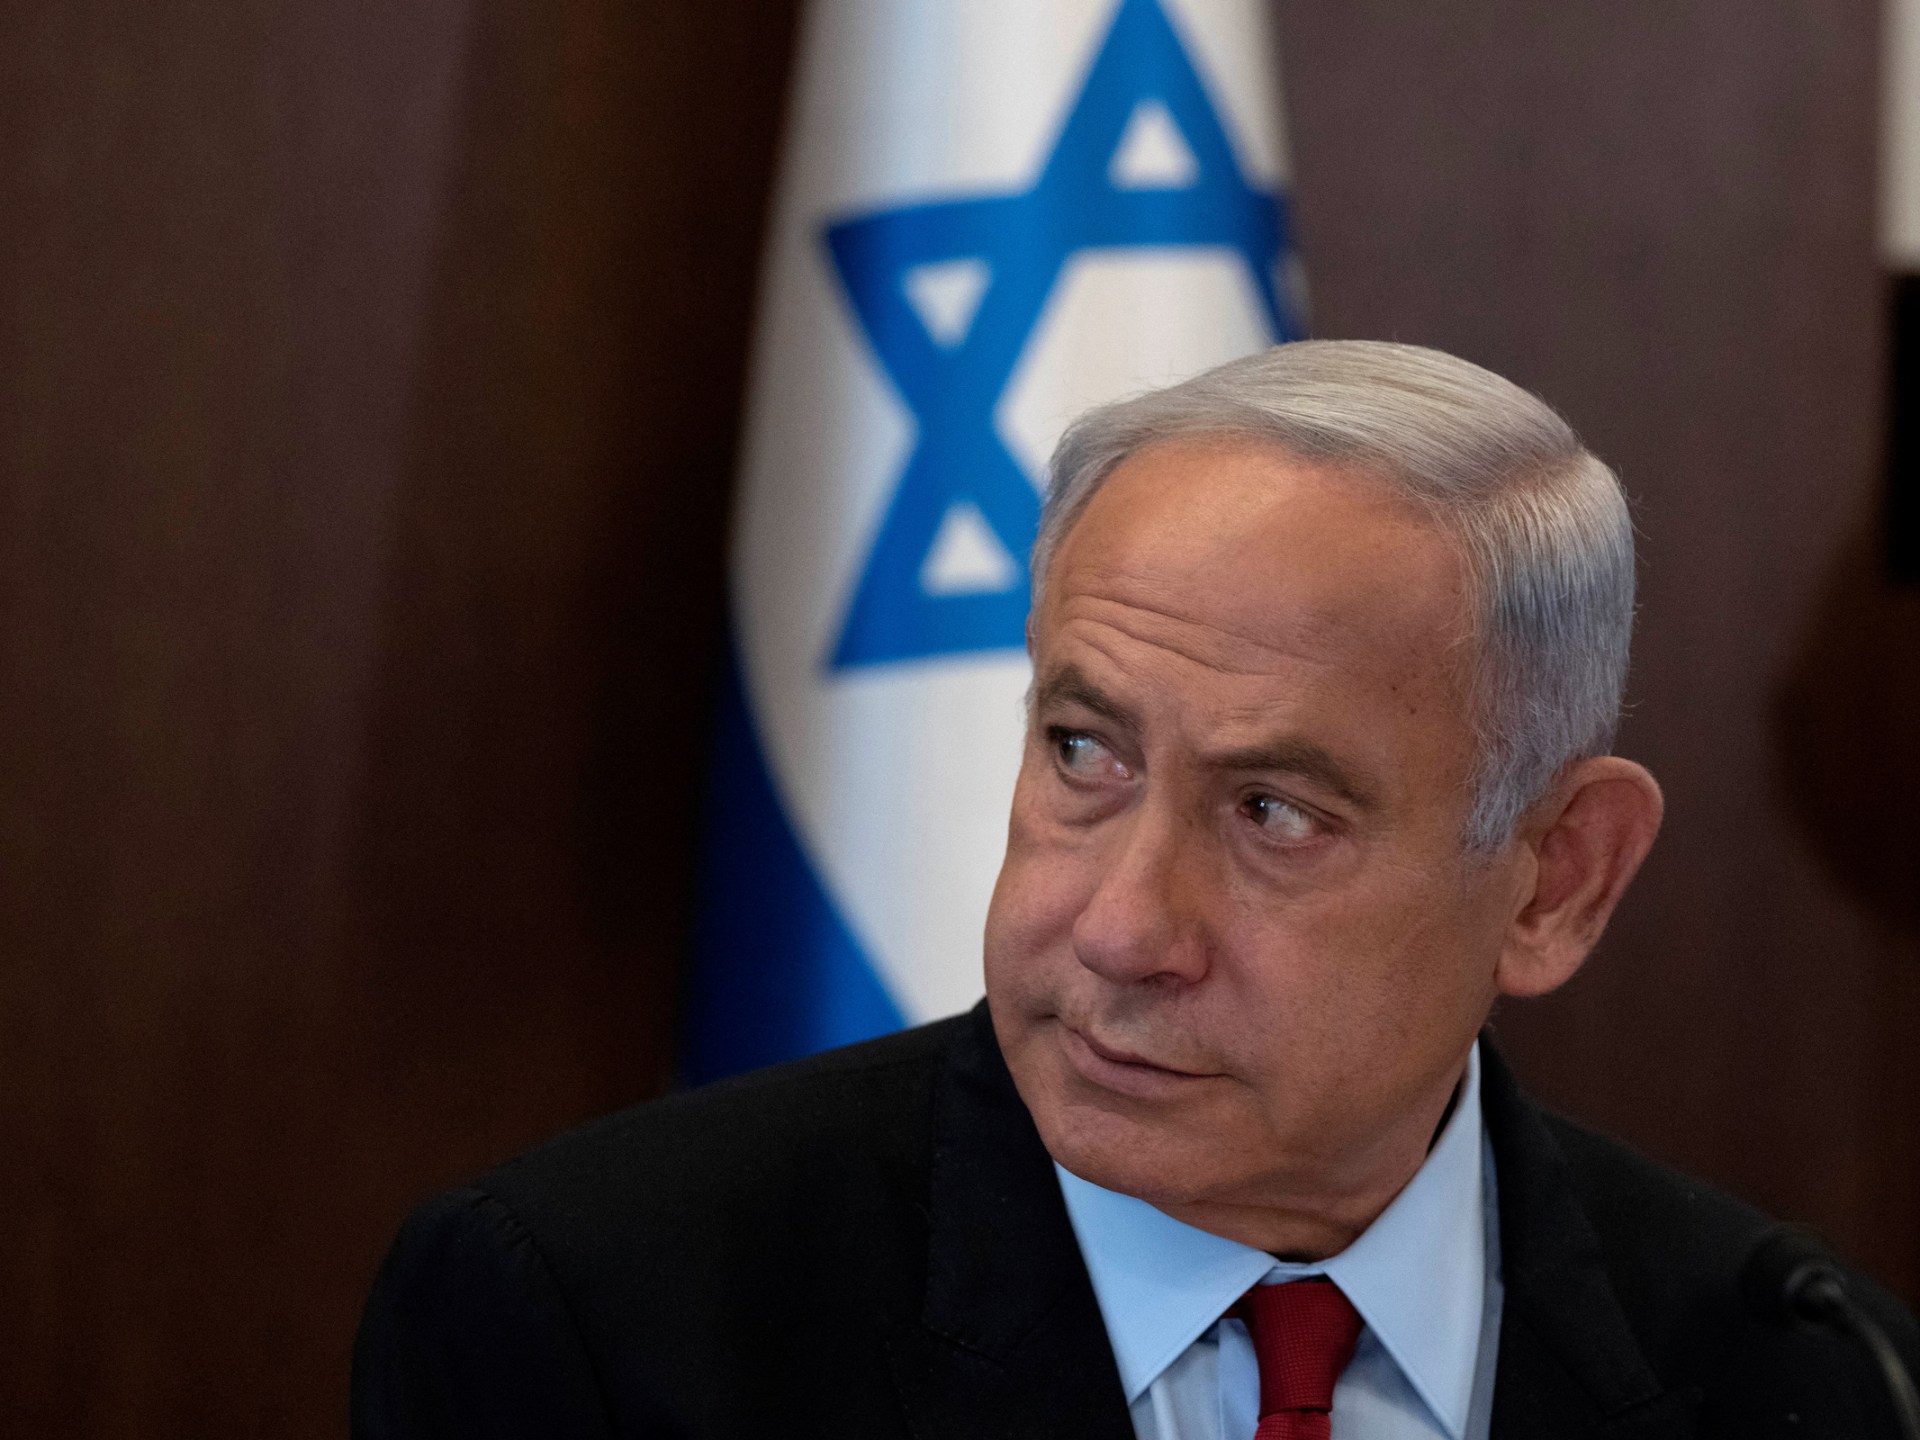 Jordan’s King Abdullah meets Netanyahu over Al-Aqsa tensions